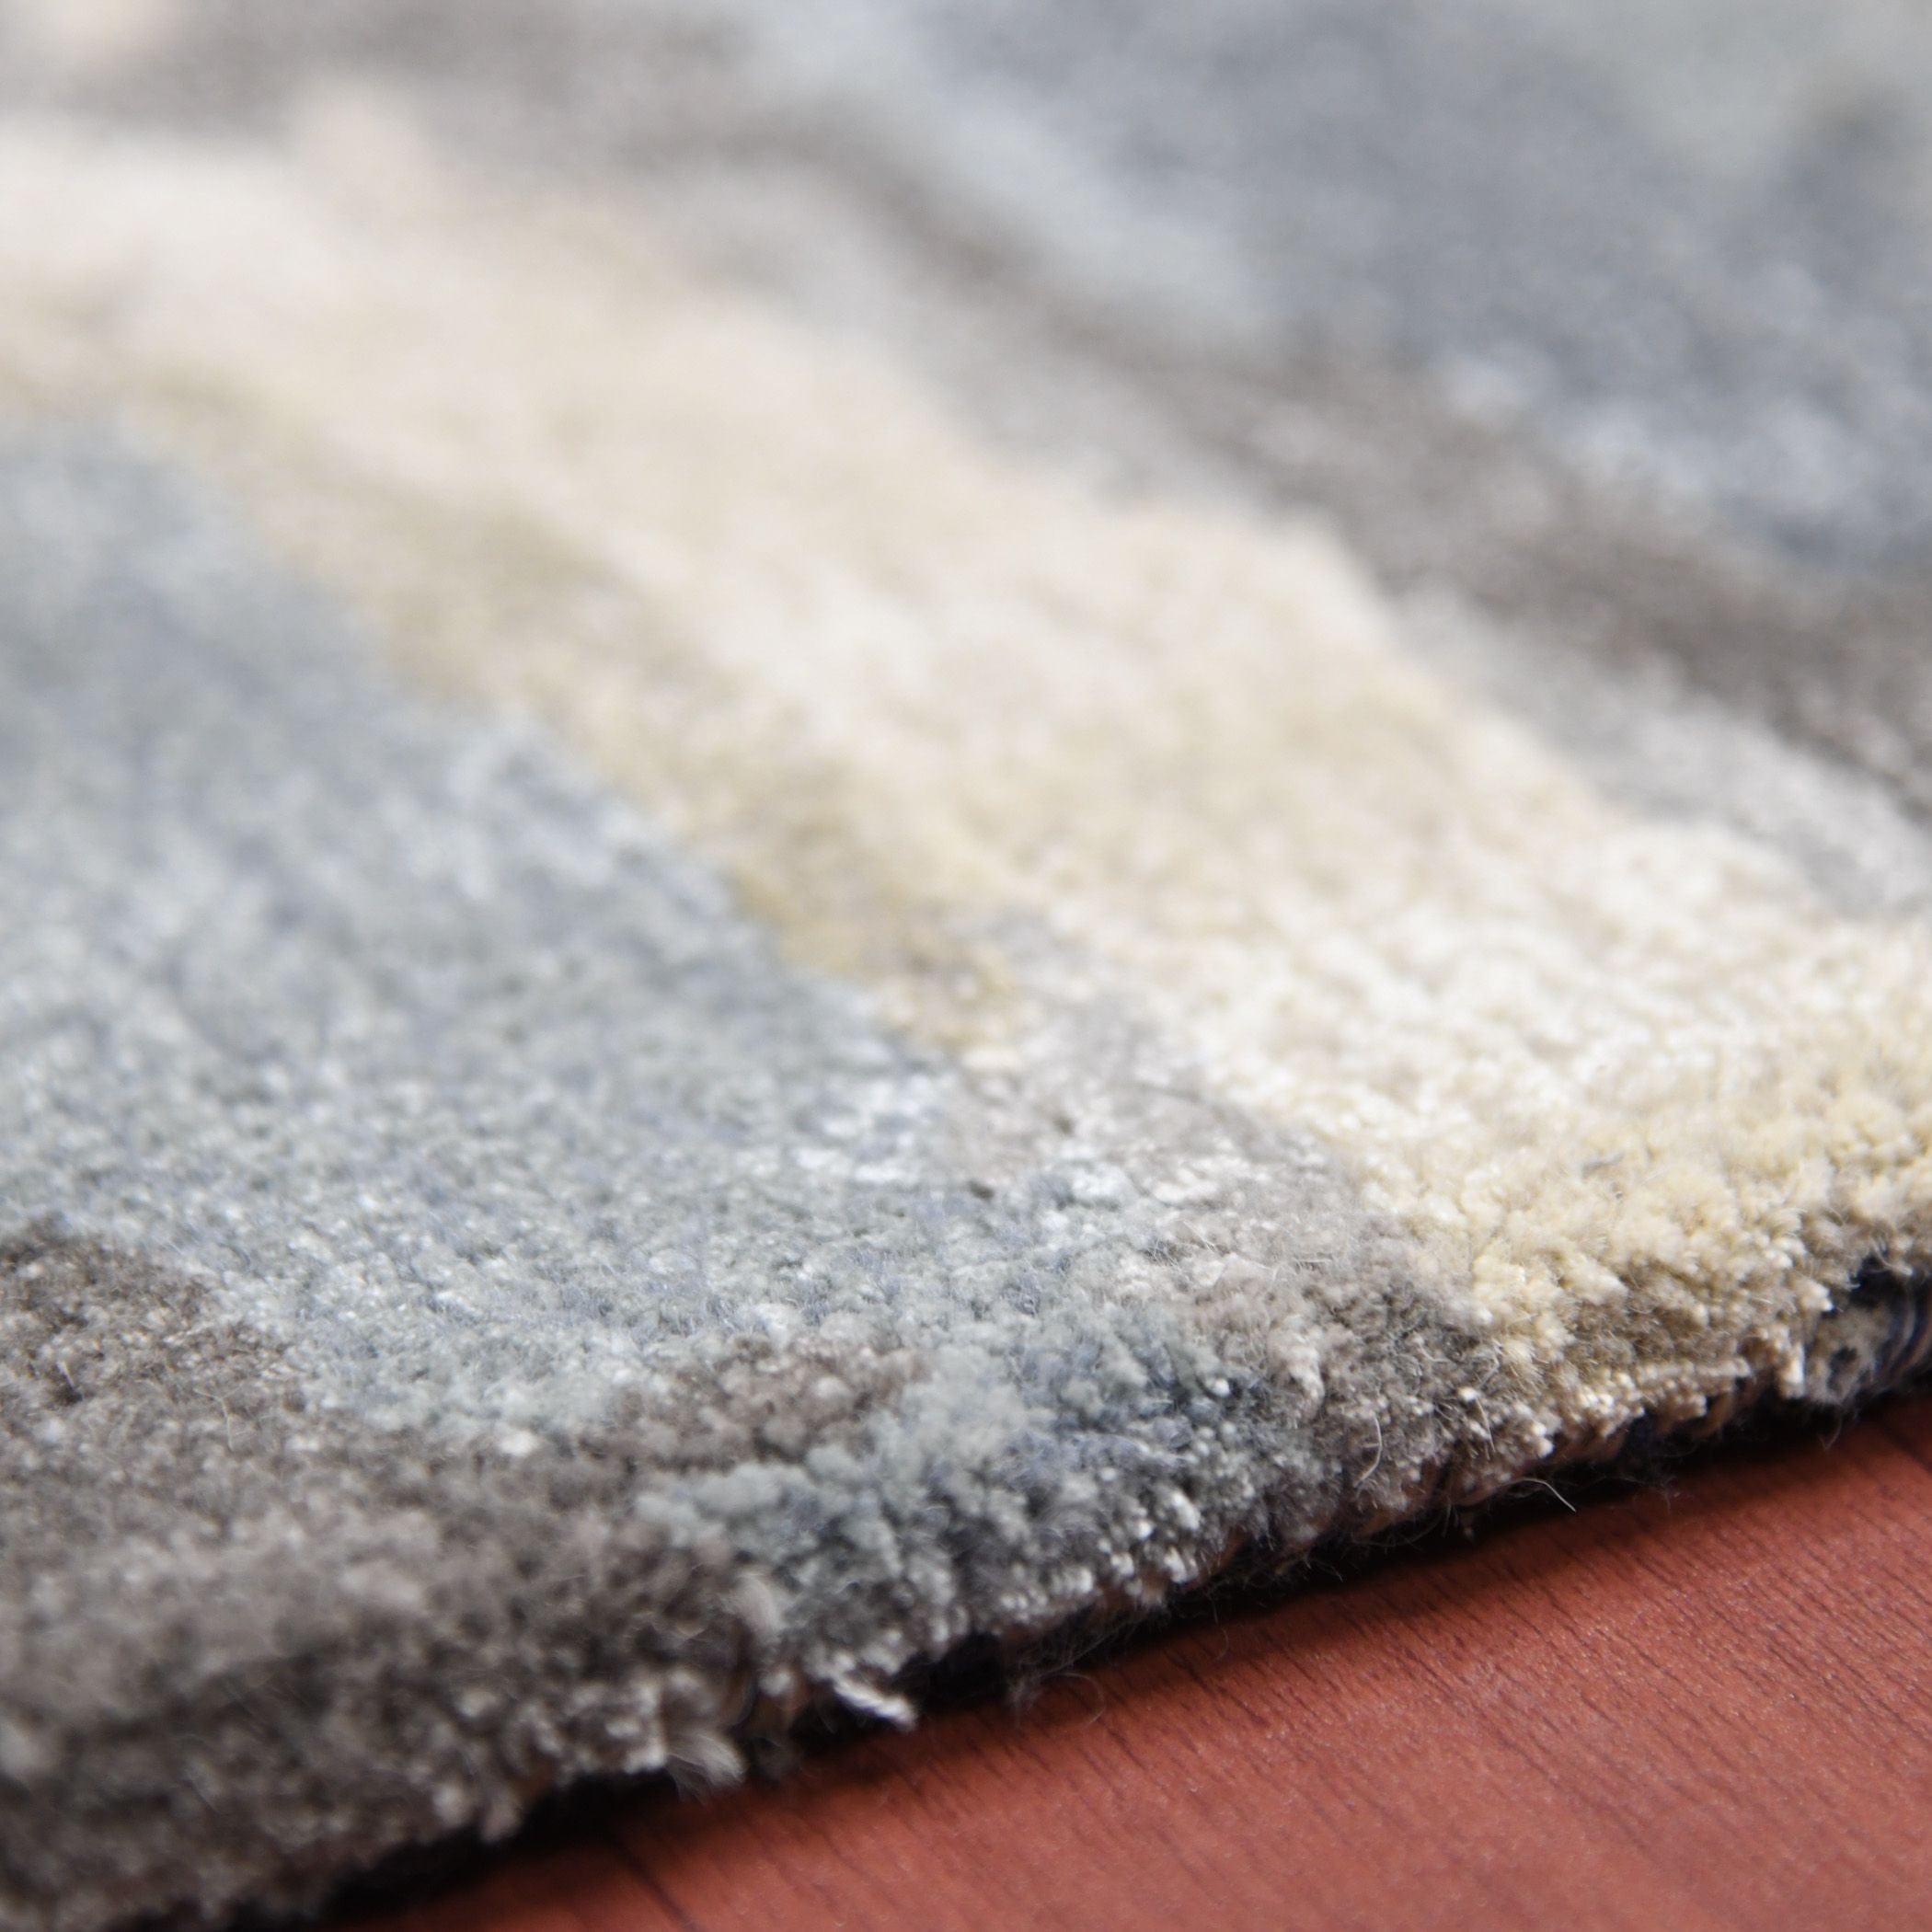 Sky Blue Wool & Viscose Dream Scape 4x6 Feet  Hand-Tufted Carpet - Rug